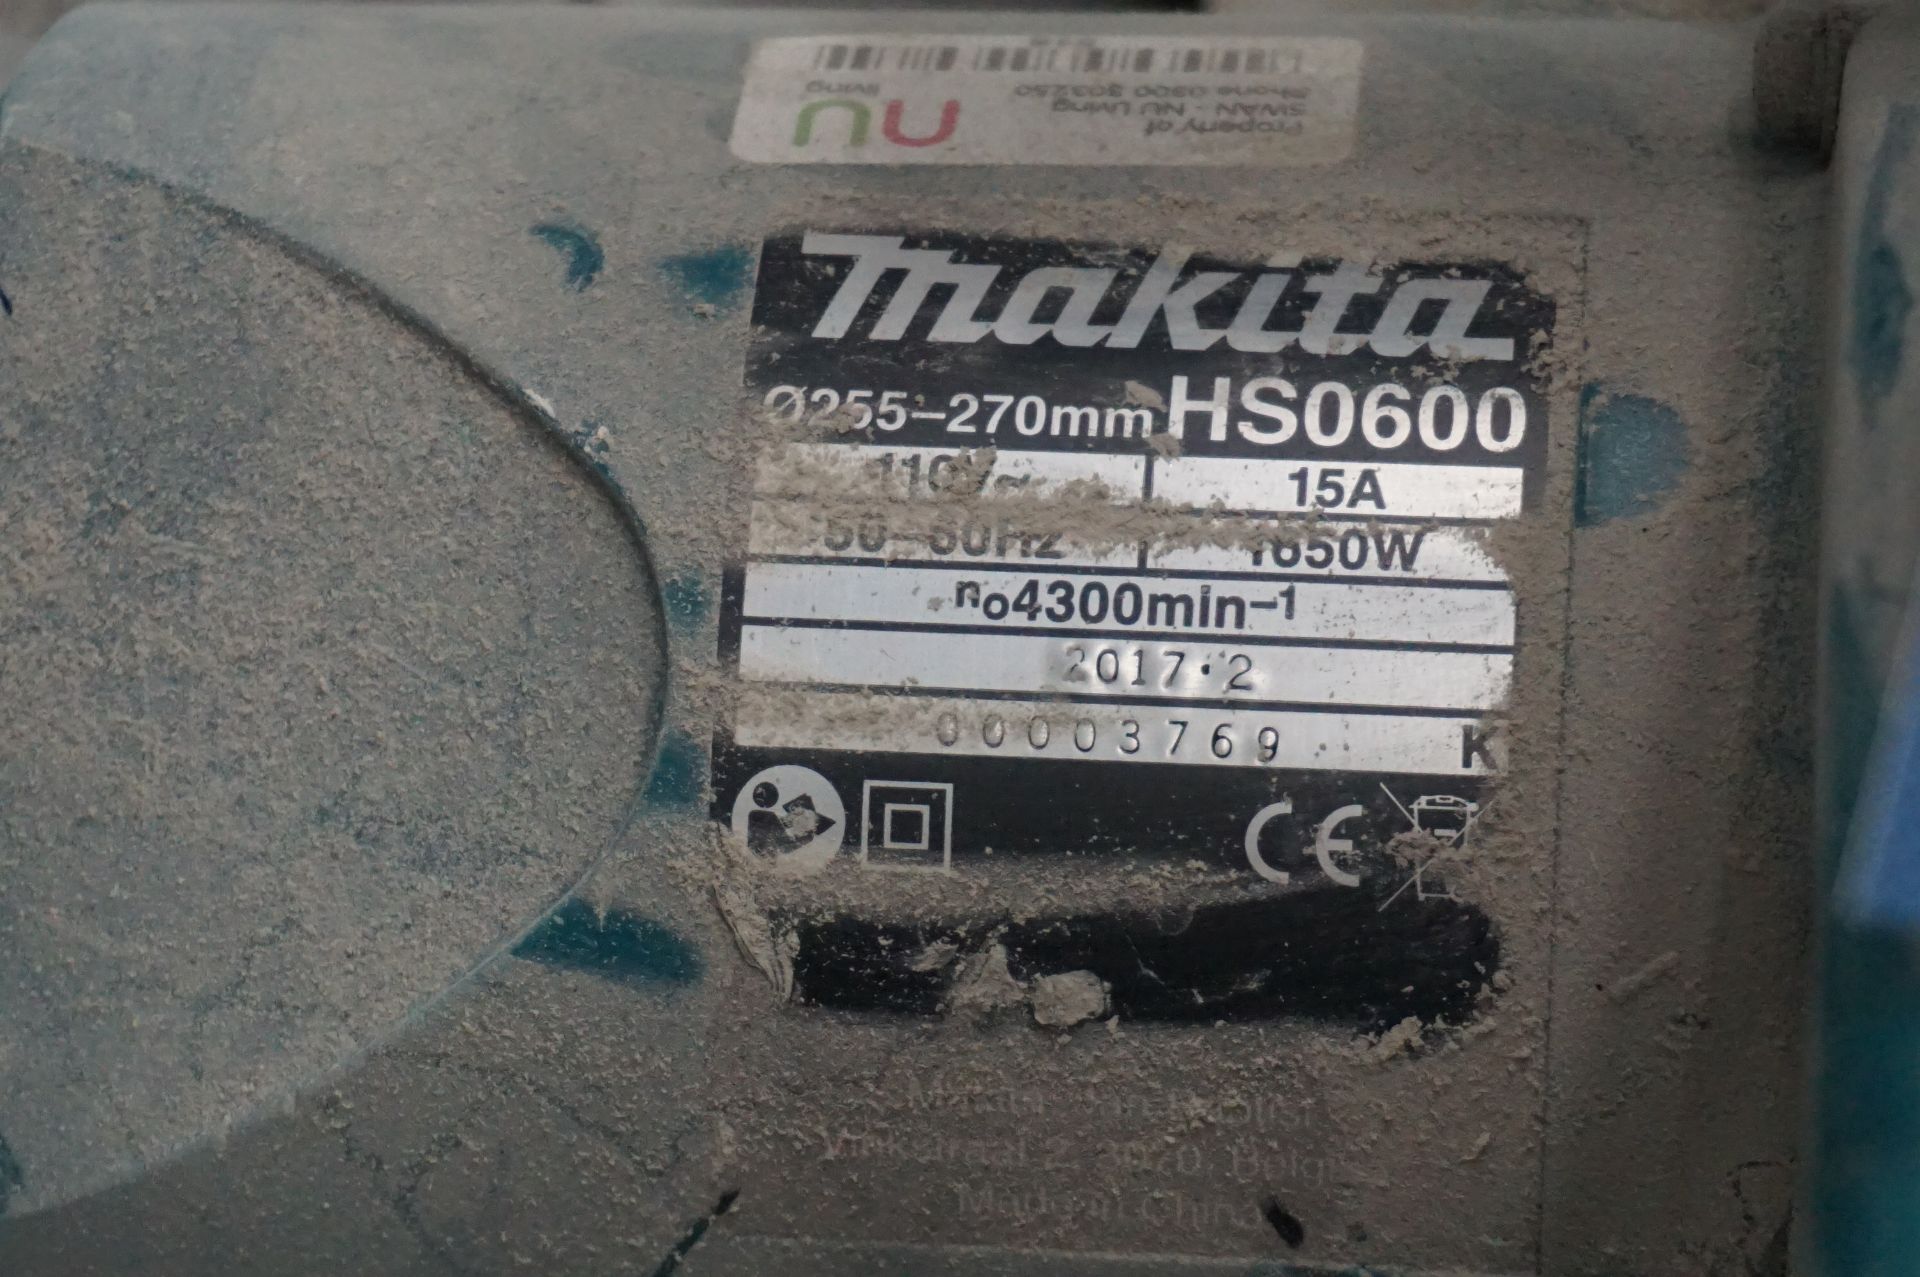 Makita, ML5100 mitre saw, 110v together with Makita, HS0600 circular saw, 110v (DOM: 2017) - Image 3 of 6